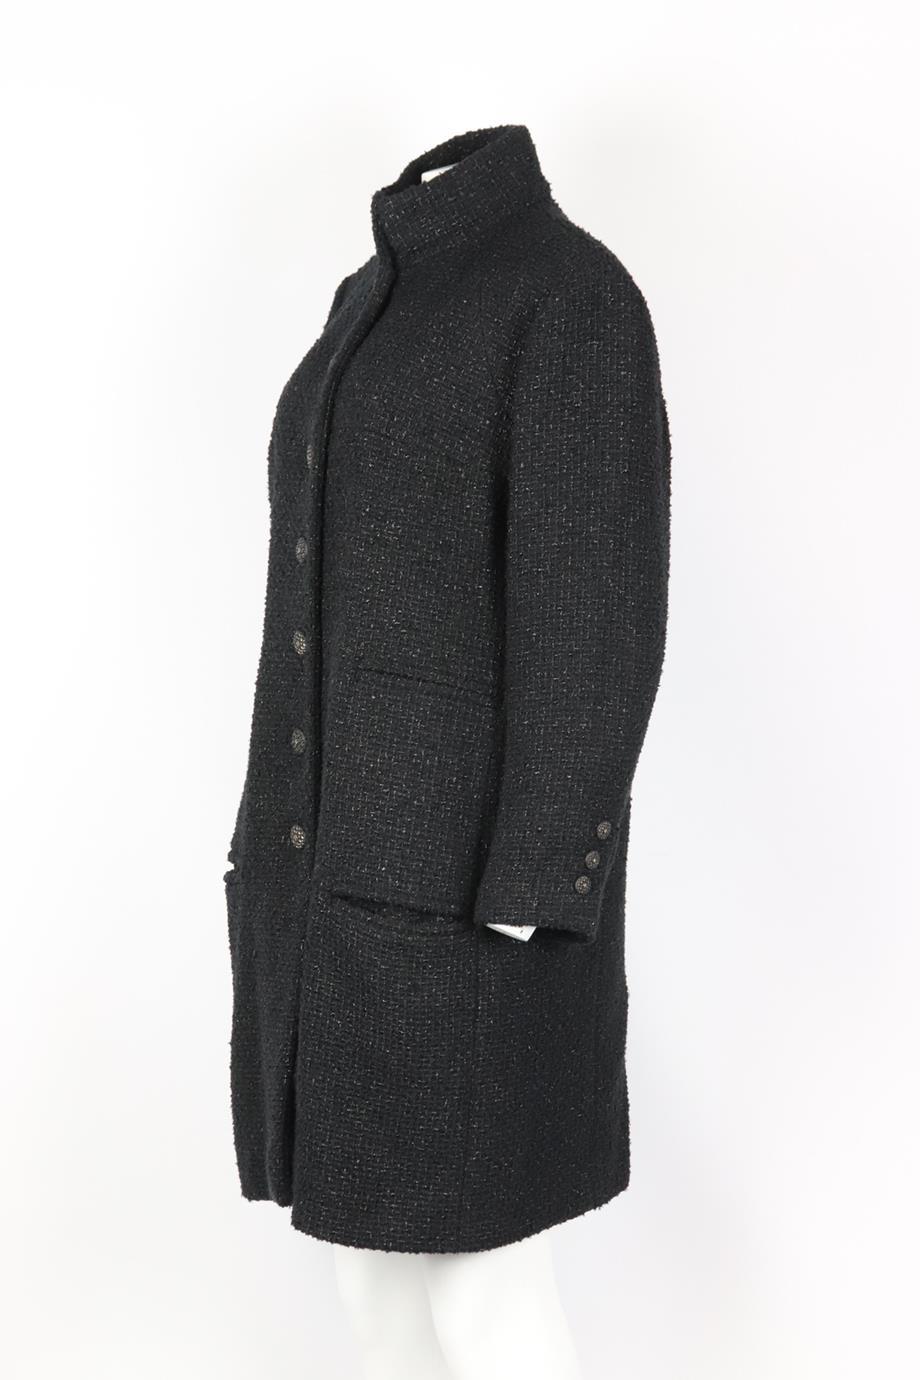 Black Chanel 2018 Cotton And Wool Blend Tweed Coat Fr 50 Uk 22